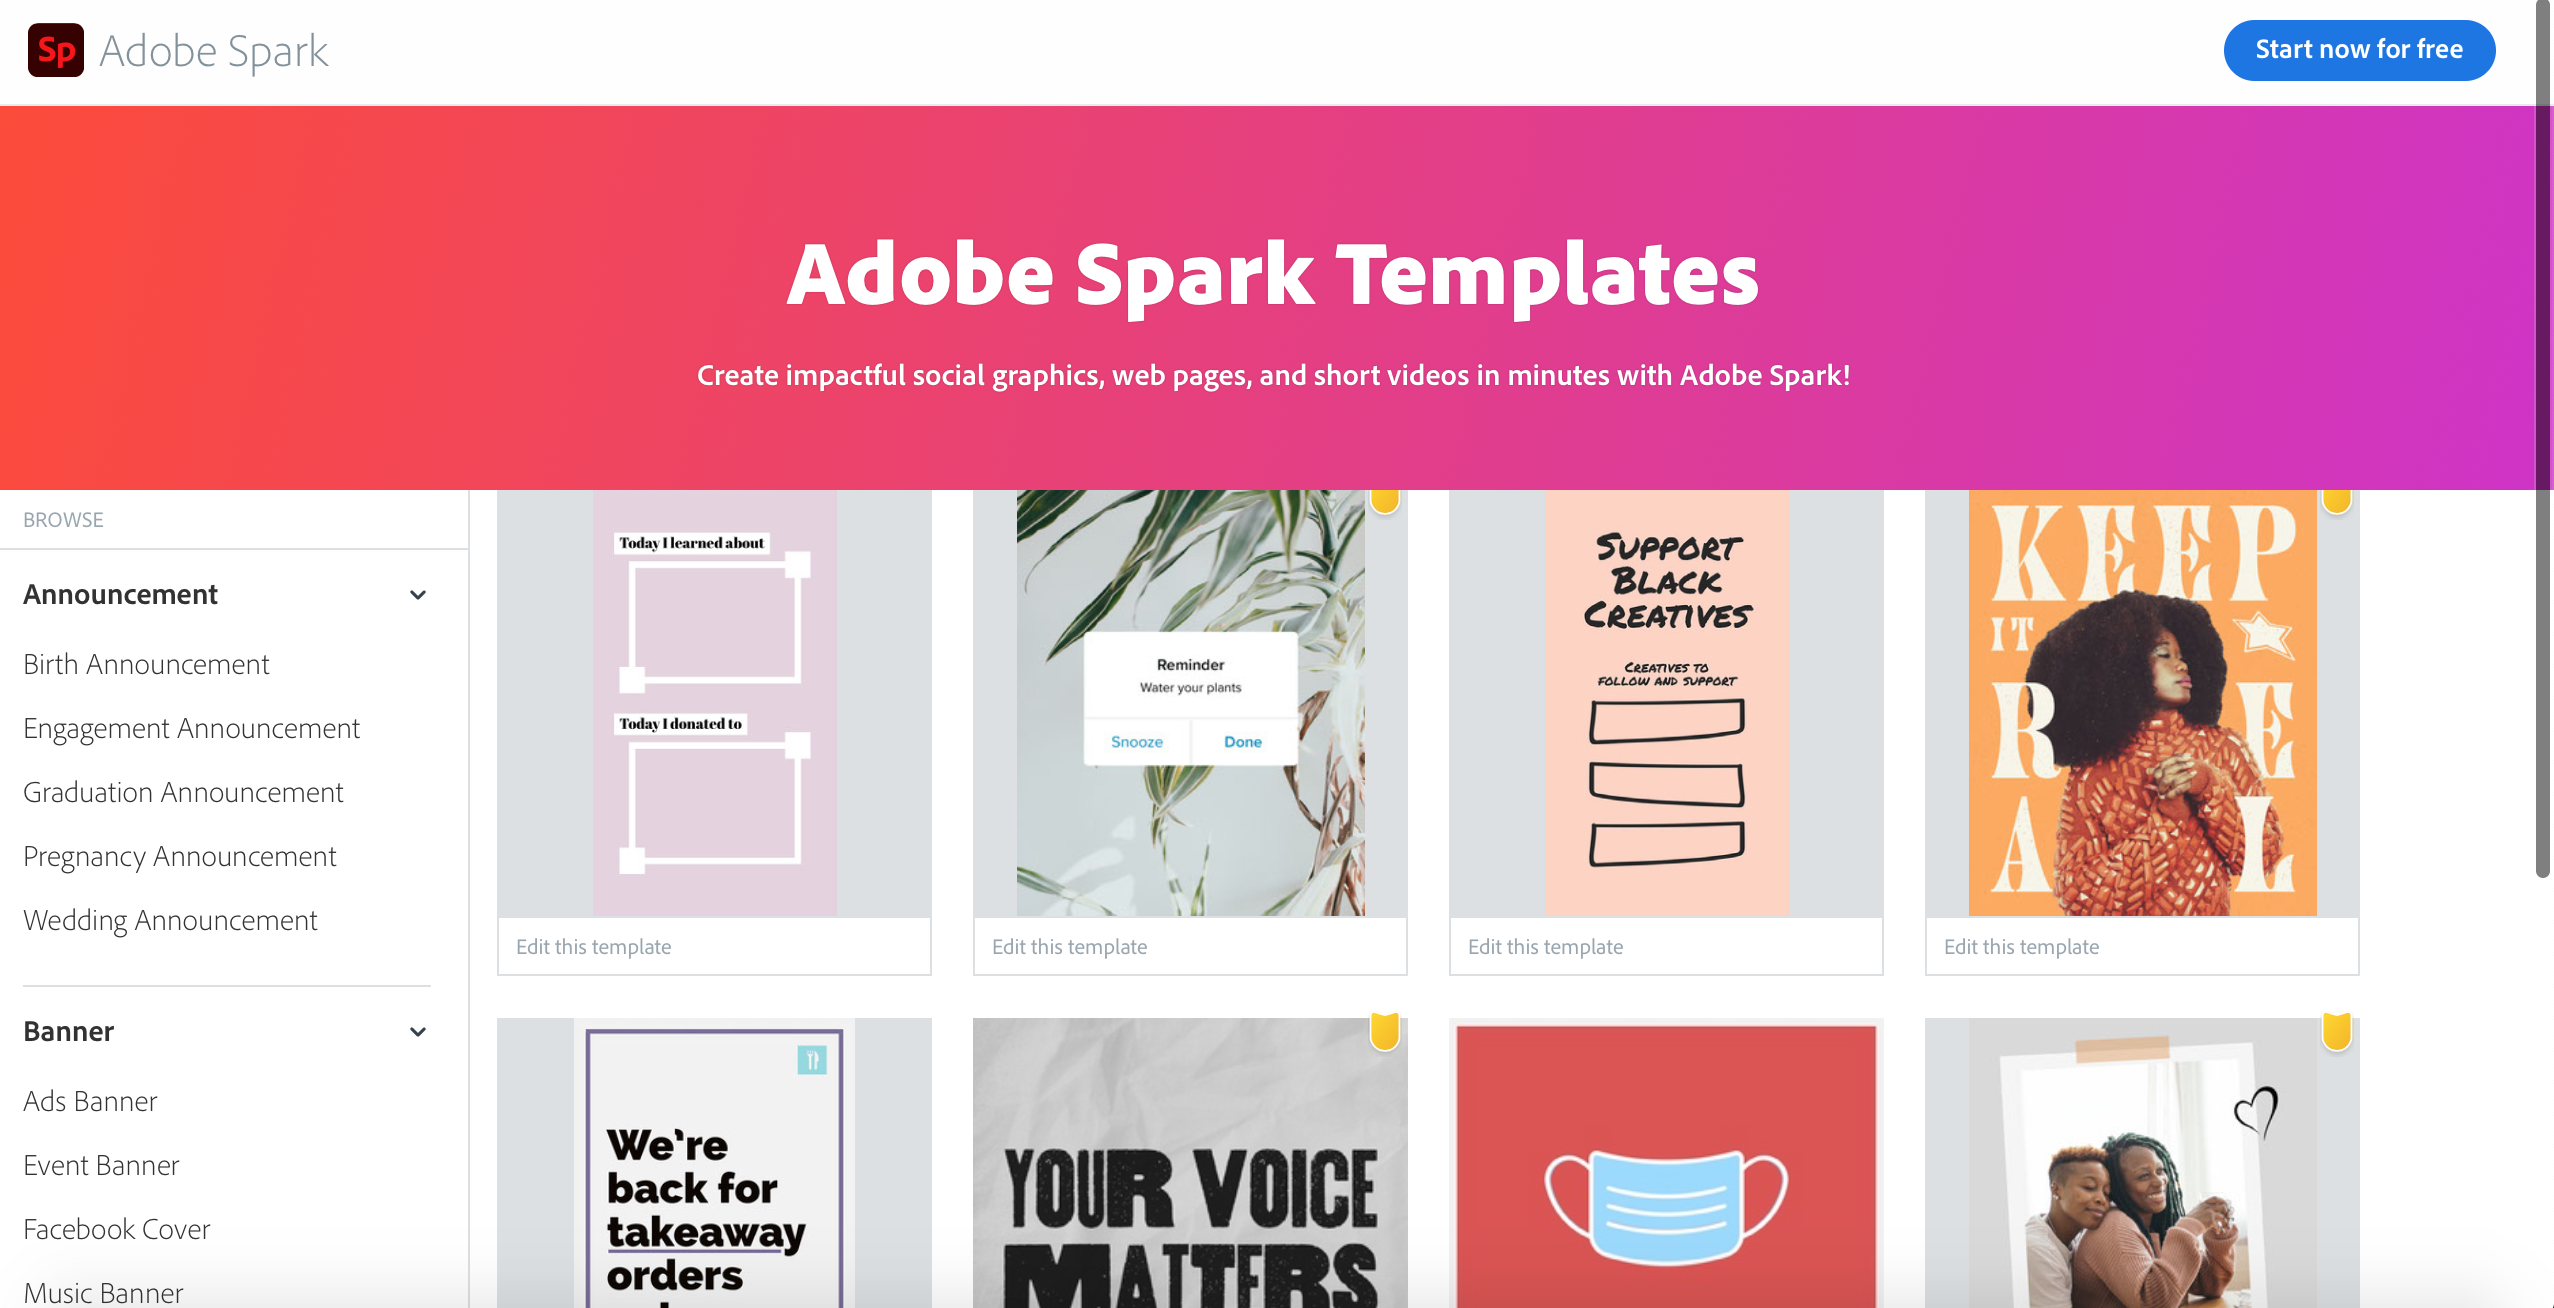 Adobe Spark Templates